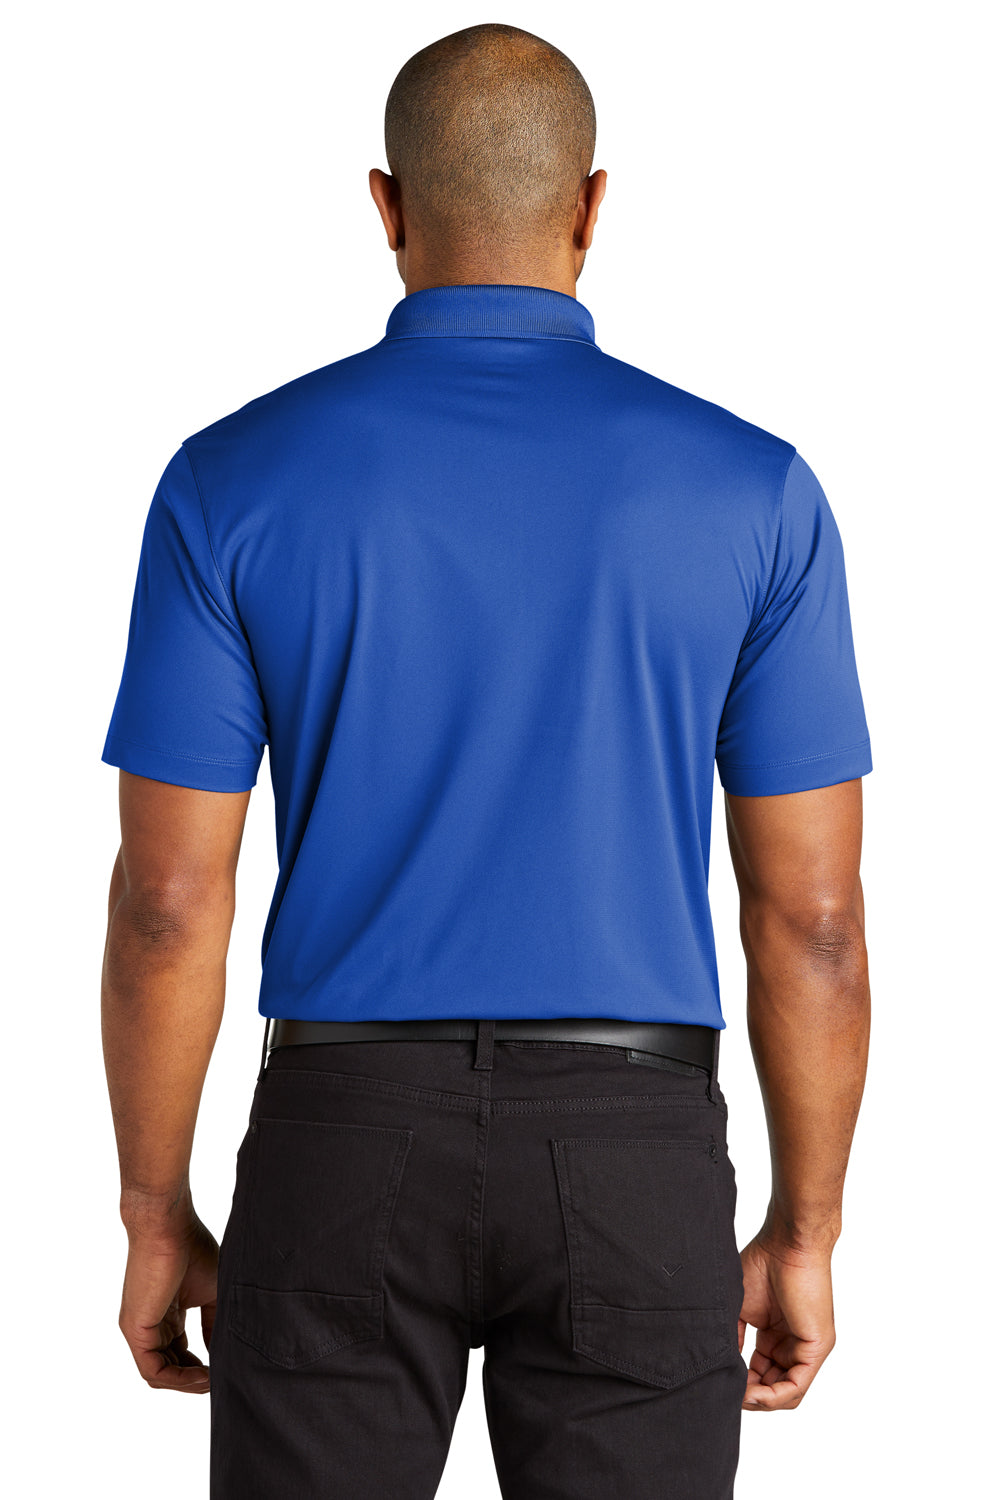 Port Authority K863 C-Free Performance Short Sleeve Polo Shirt True Royal Blue Back